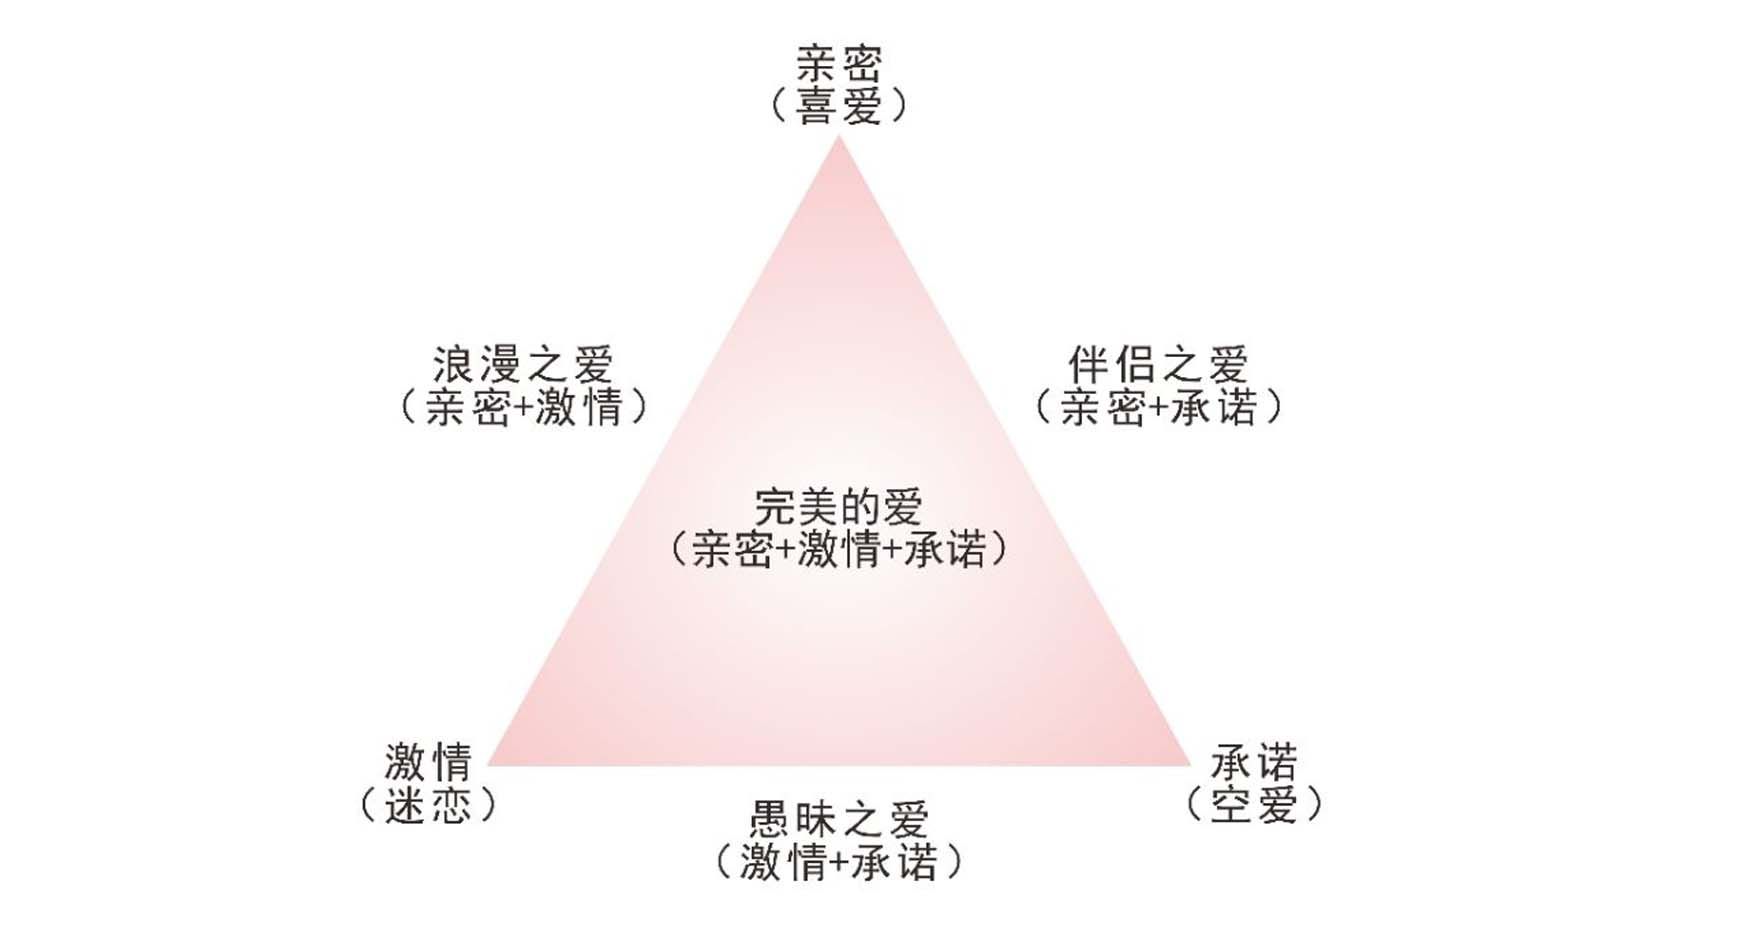 Triangular theory | 构建爱情三角理论 - 真实婚礼 - 婚礼风尚